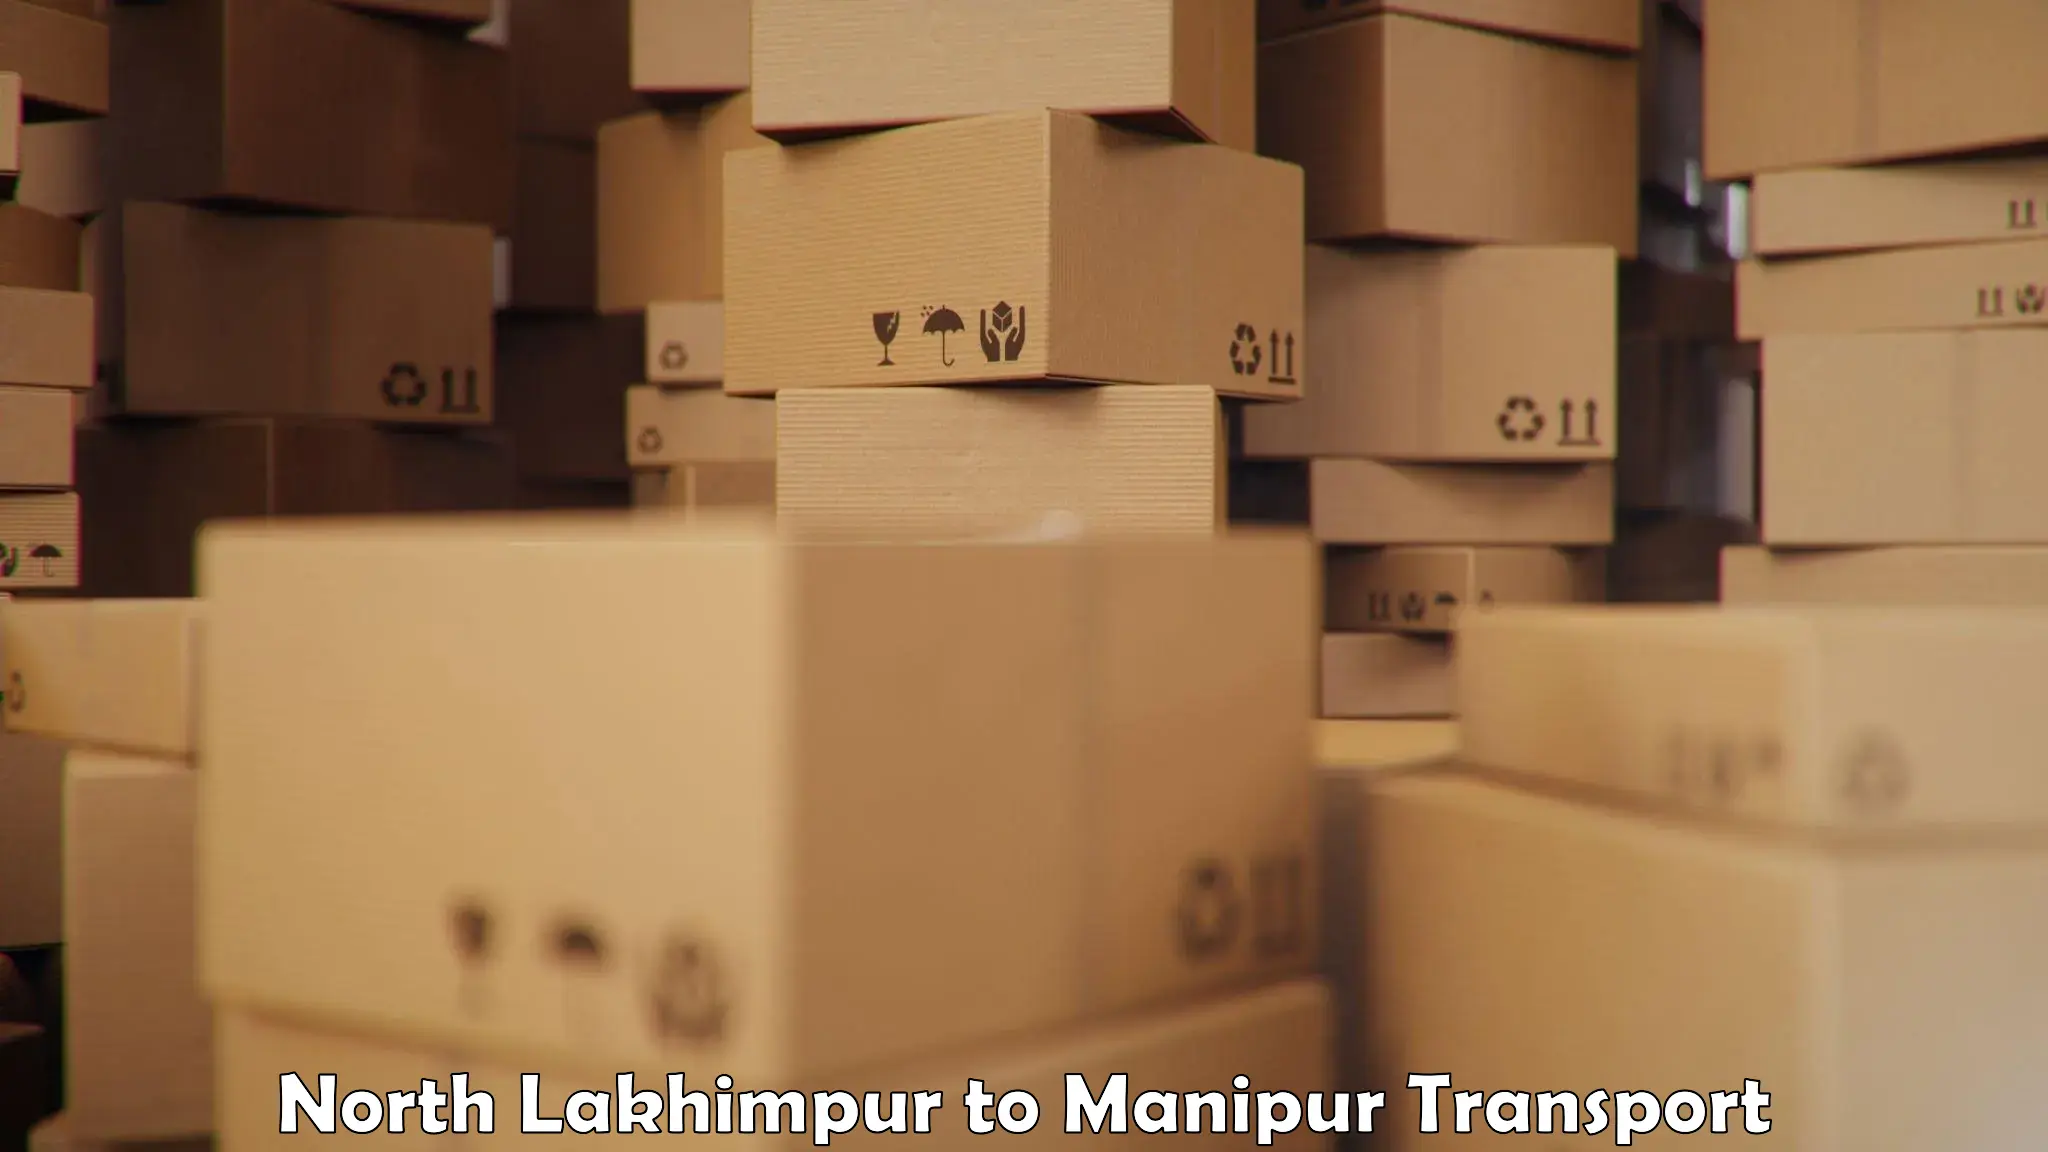 Furniture transport service North Lakhimpur to Imphal